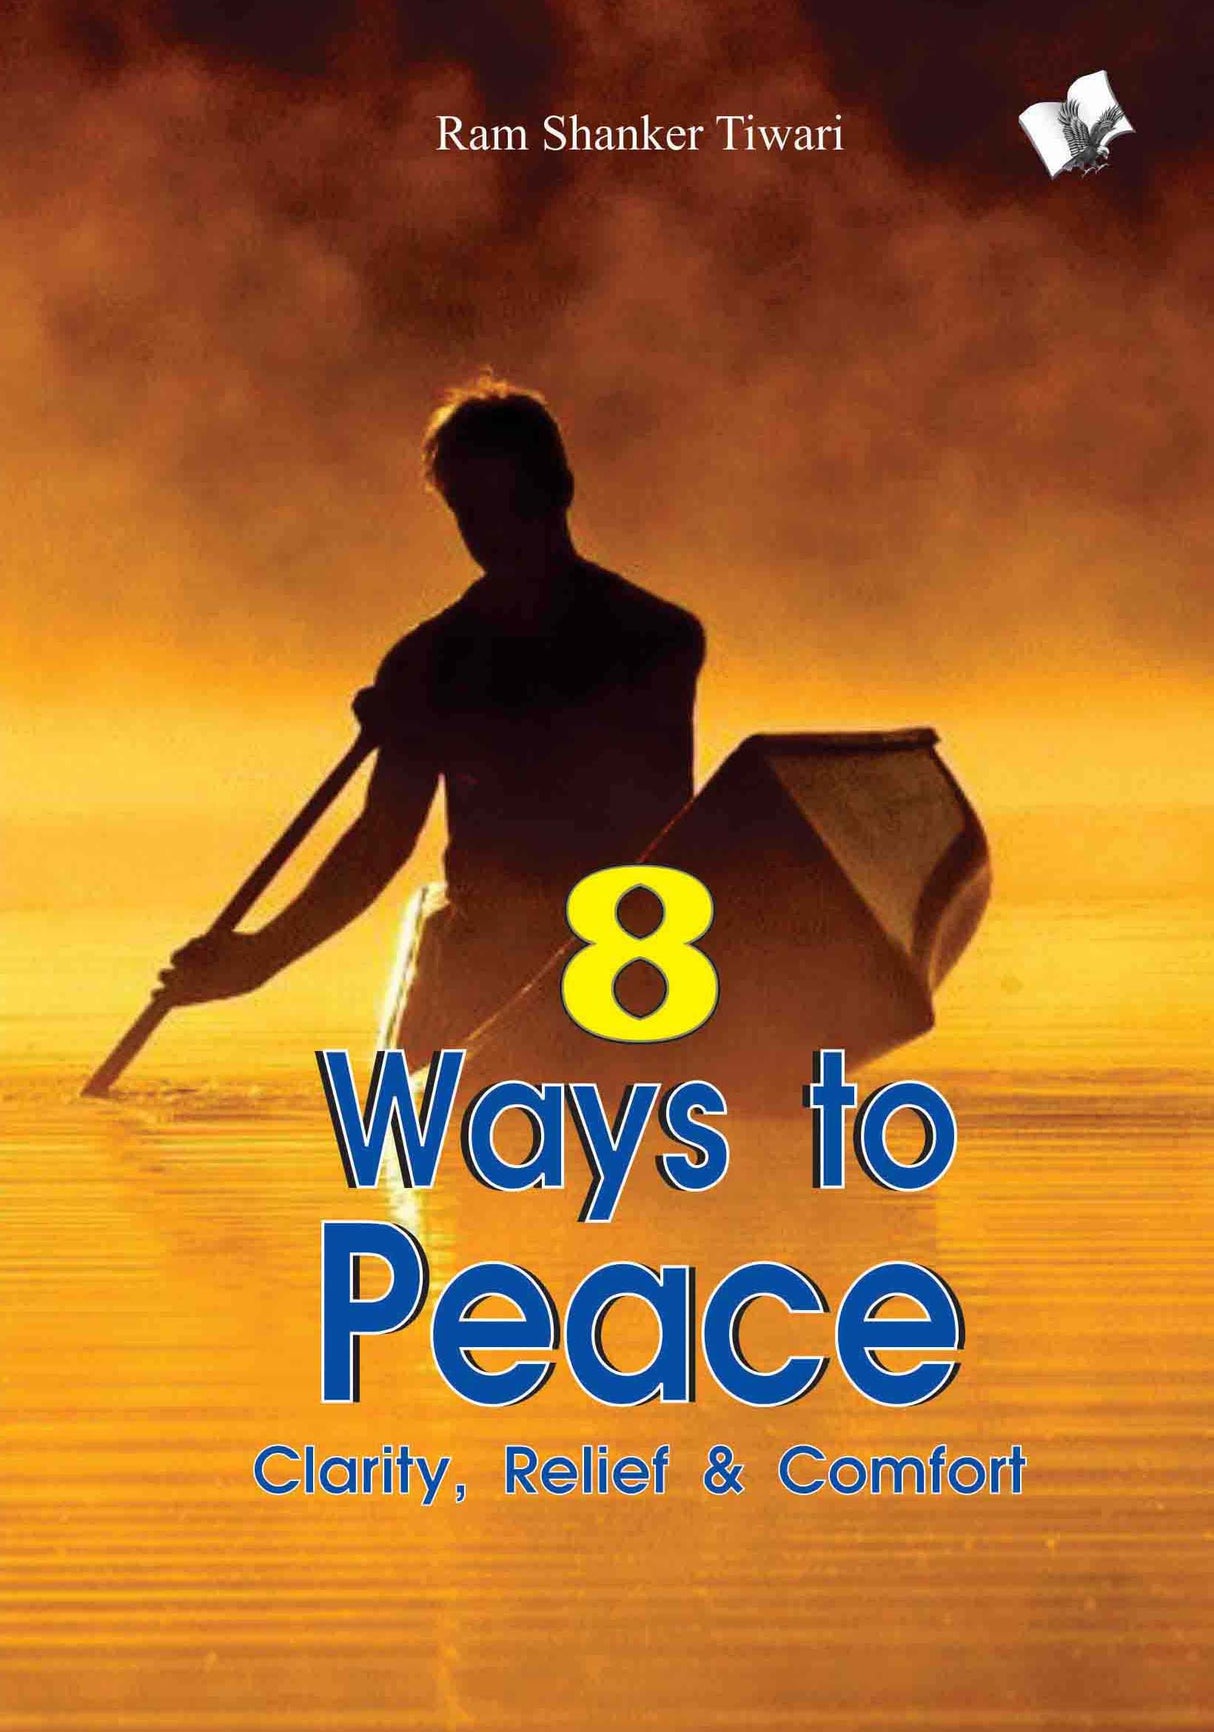 8 ways to peace : Clarity, Relief & Comfort